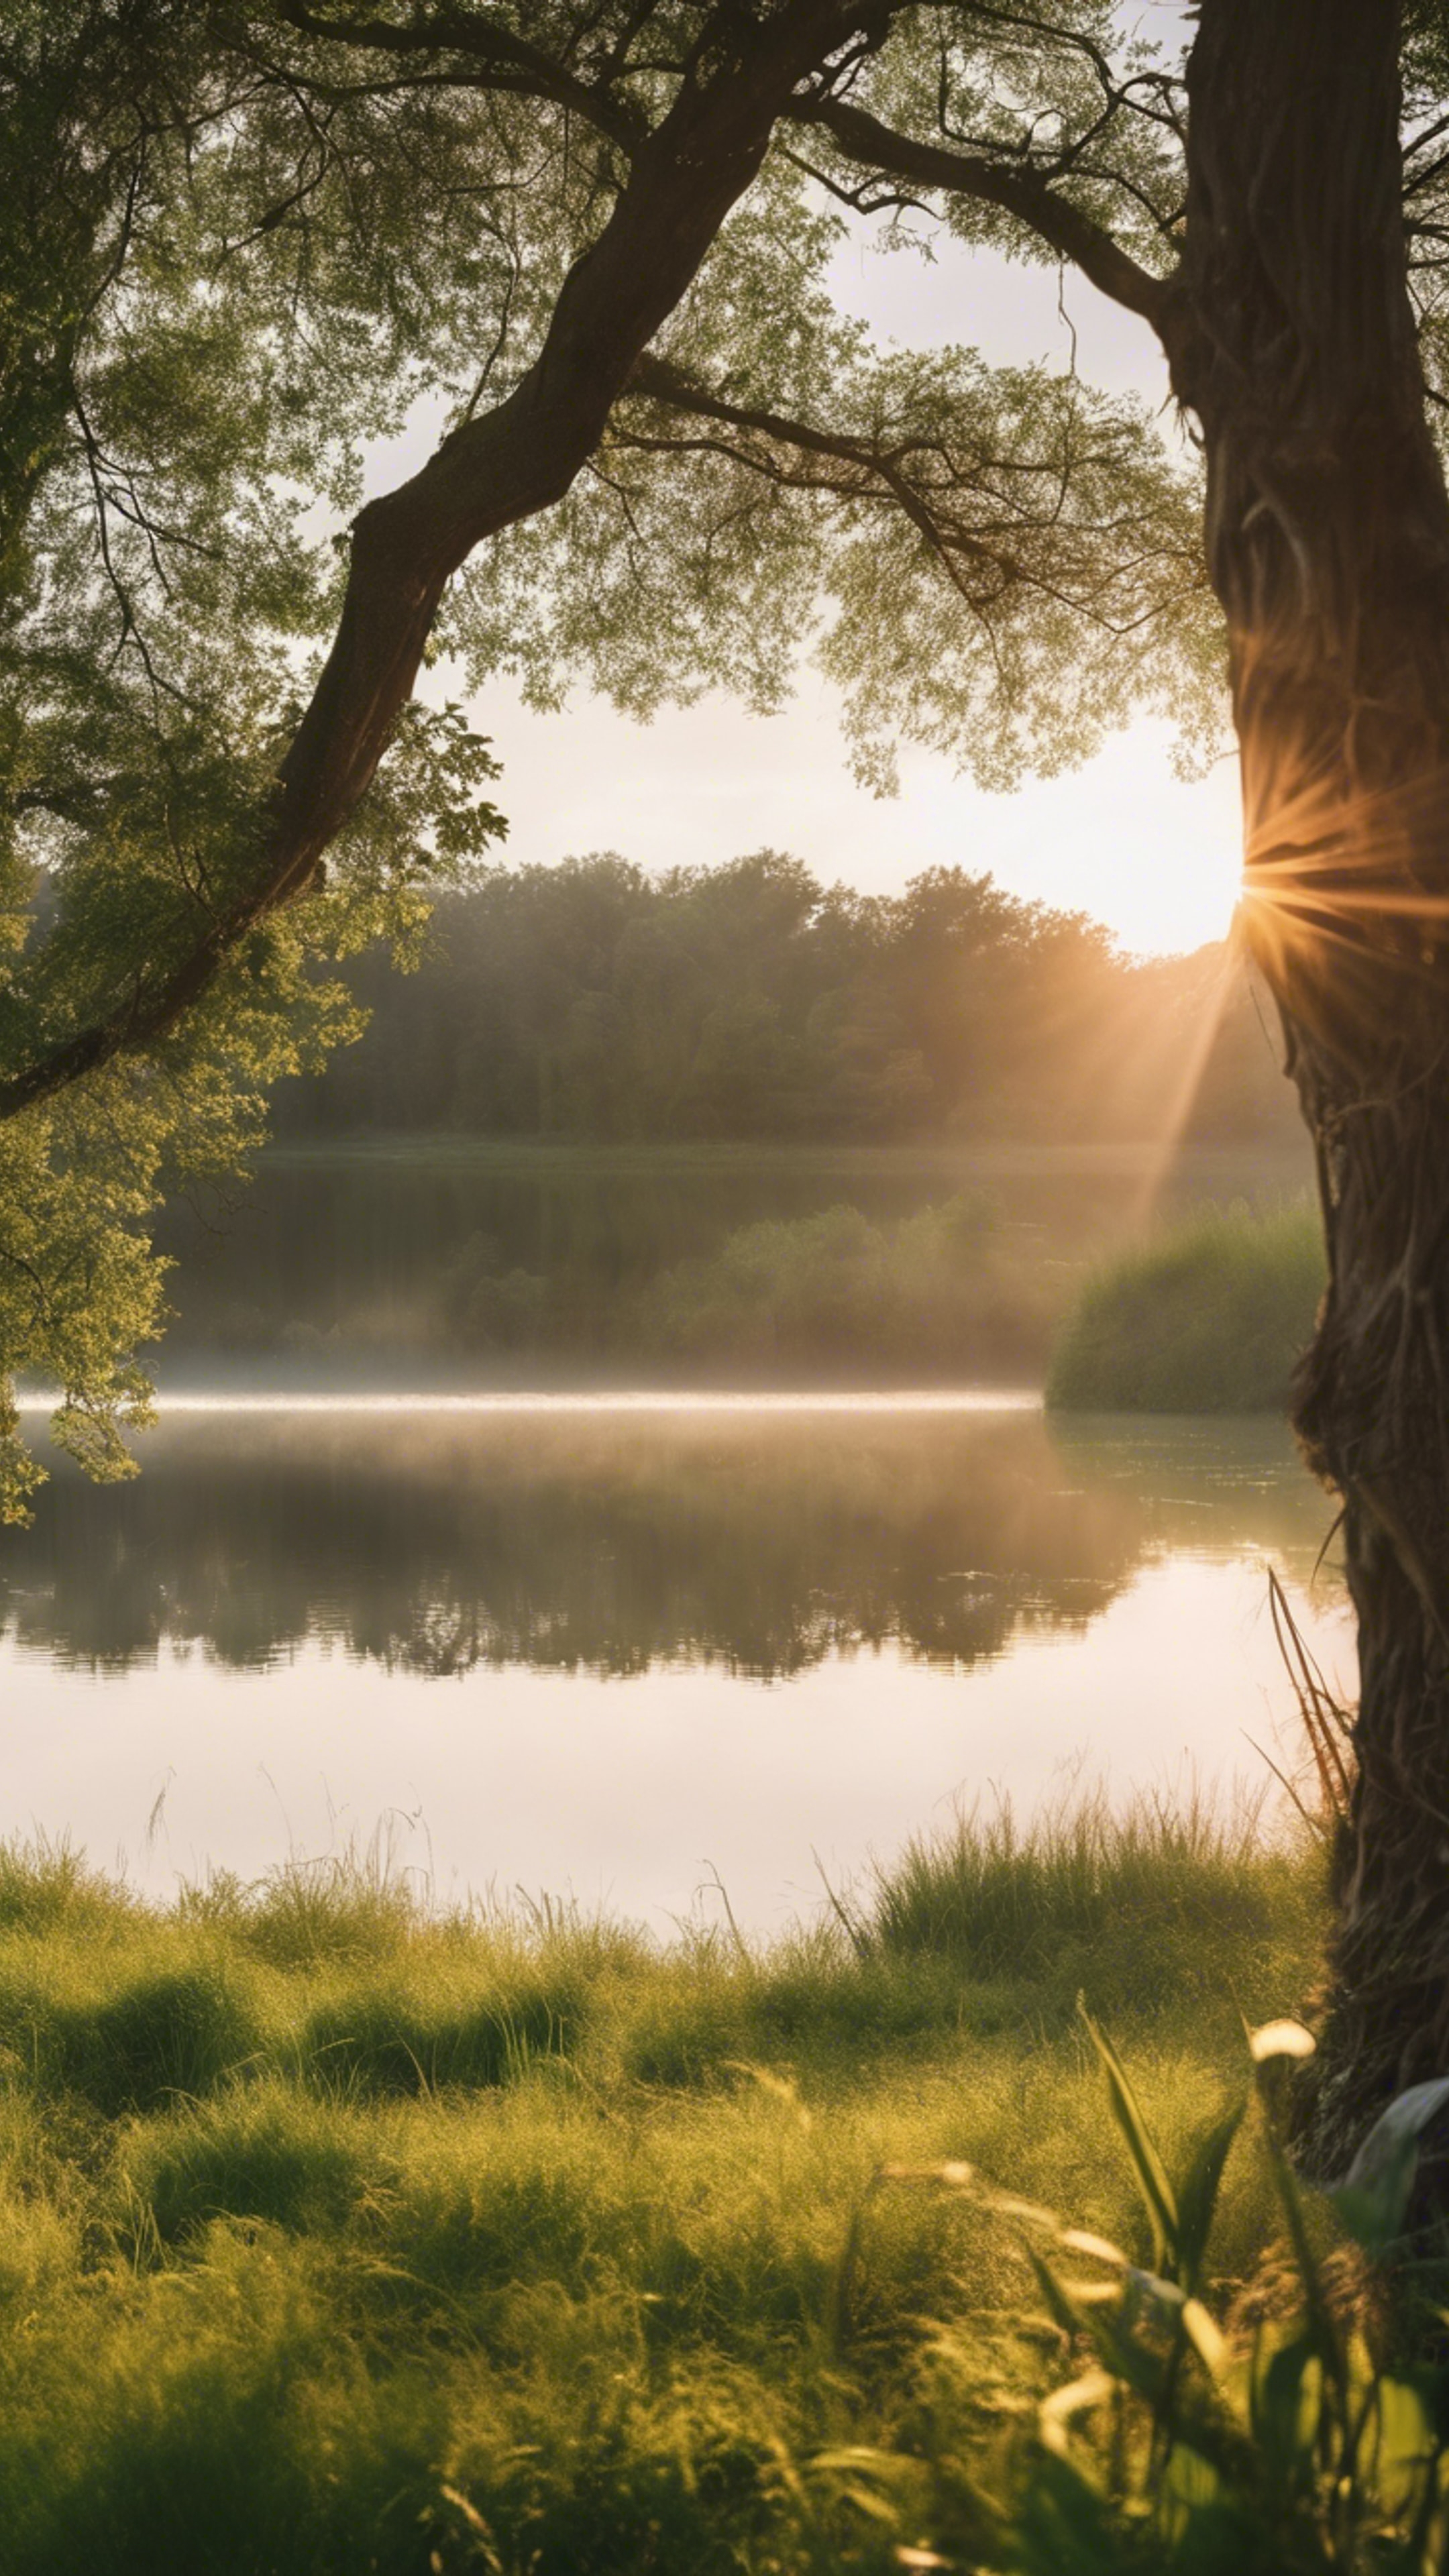 A beautiful sunrise reflecting off a serene lake, enveloped by lush green meadows. Tapeta[3fcd1b5f237347a583b1]